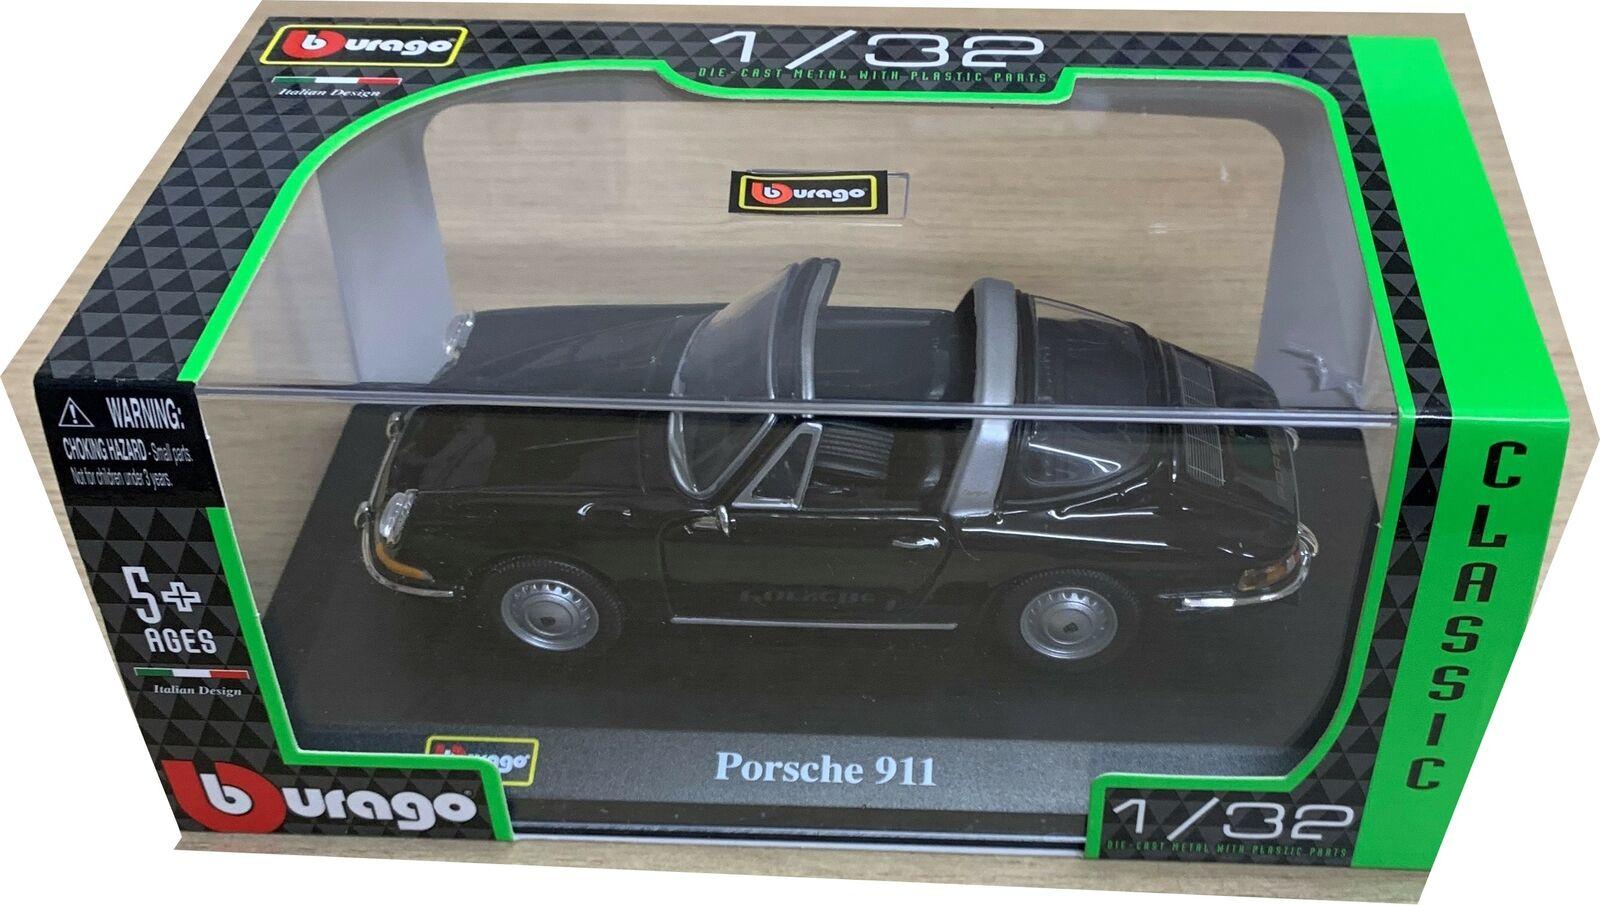 Porsche 911 1967 in black 1:32 scale model from Bburago